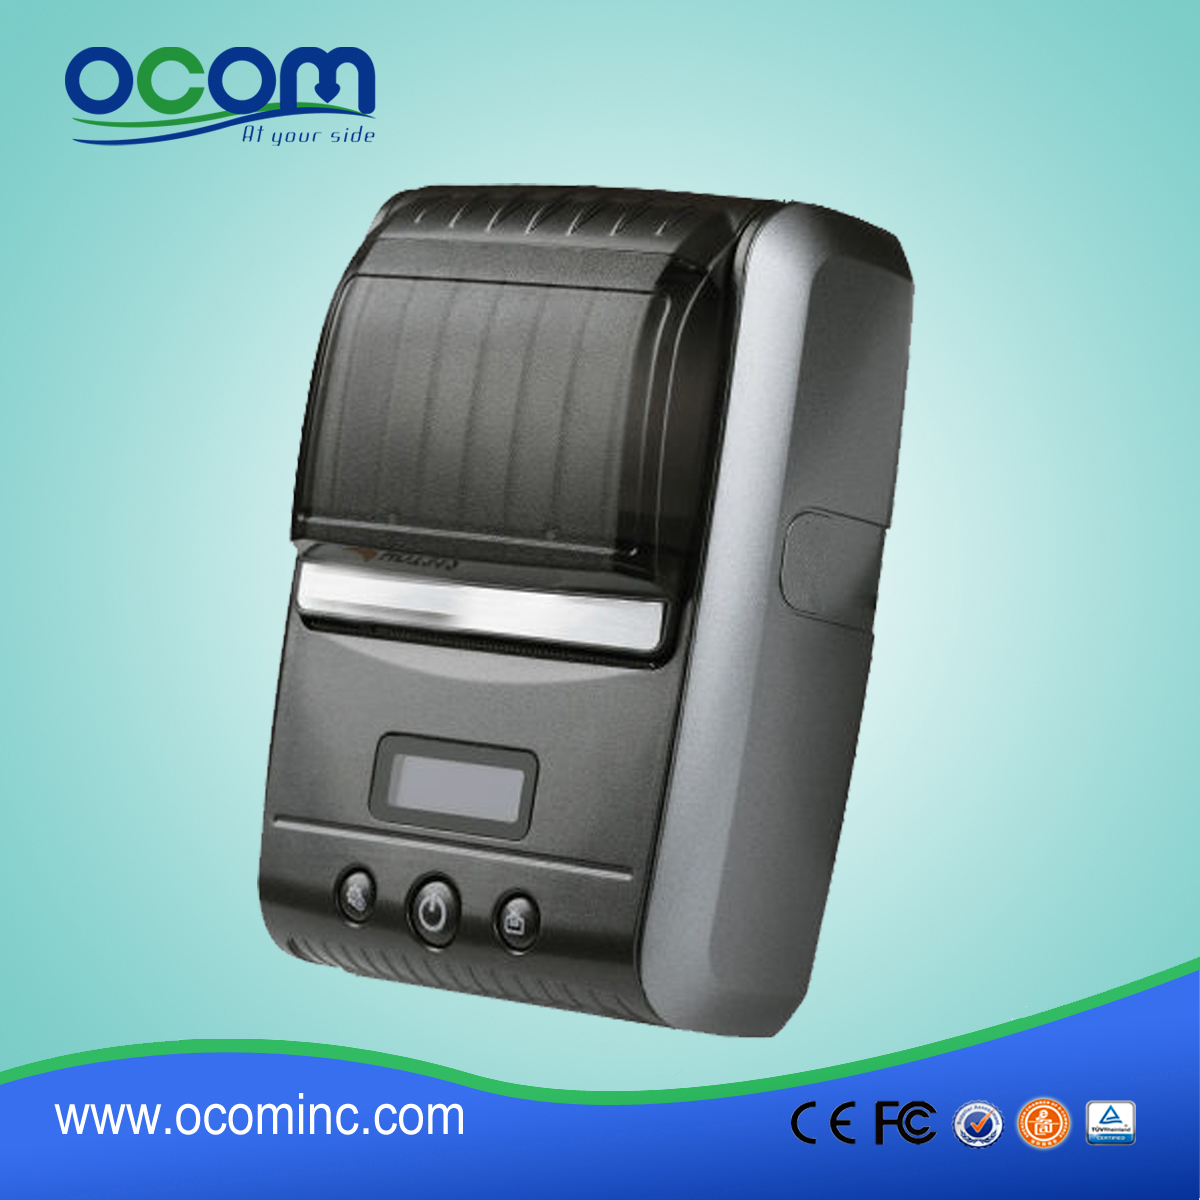 58mm mini bluetooth barcode label printer-OCBP-M58